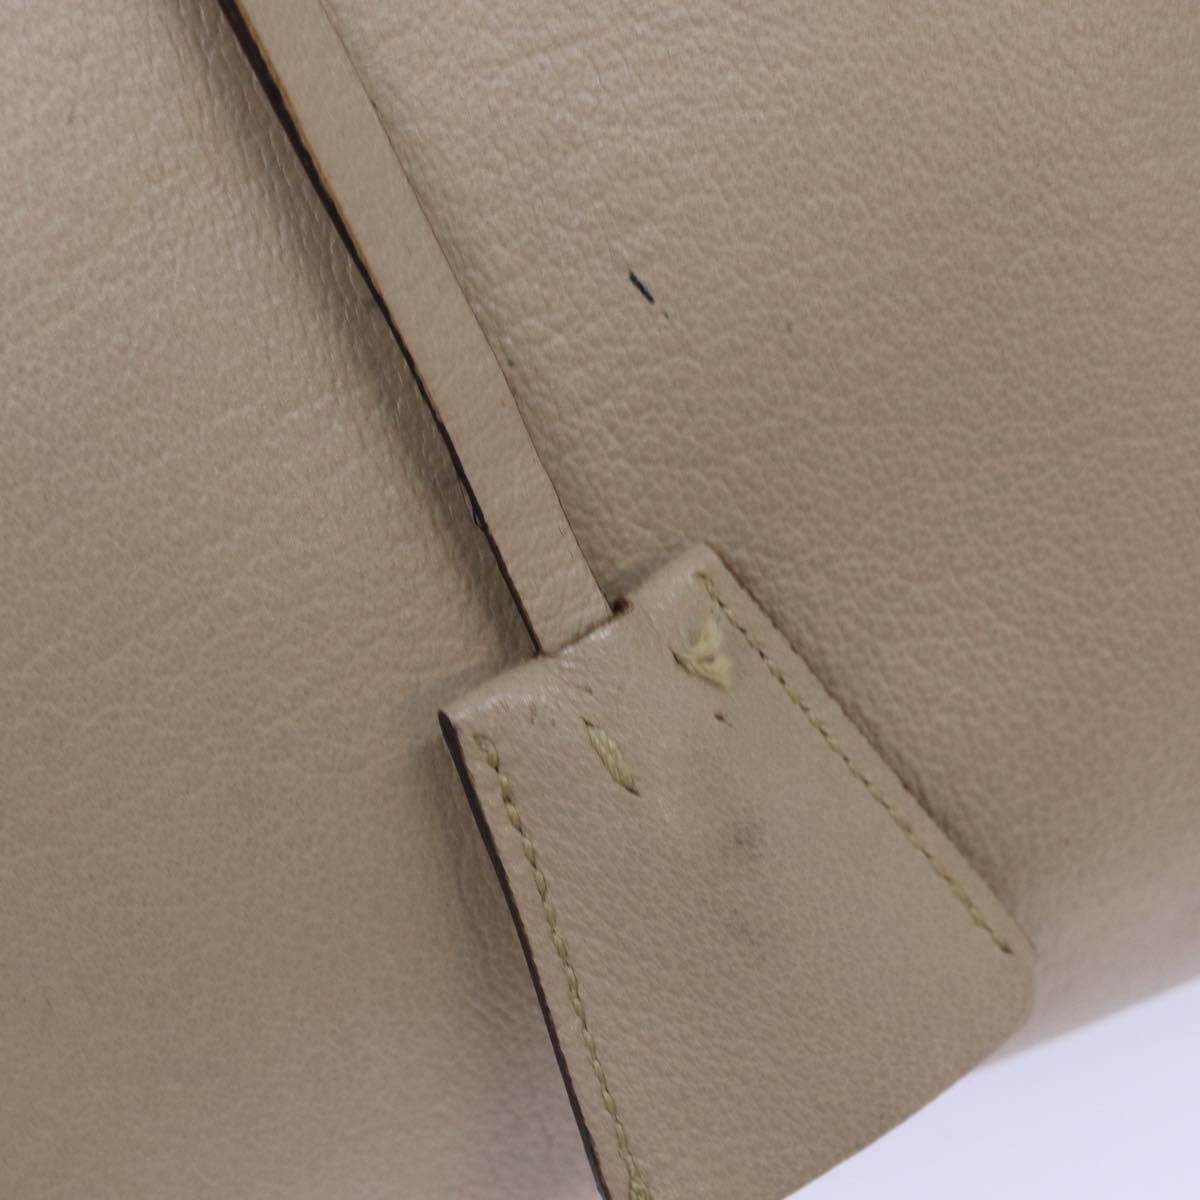 PRADA Hand Bag Leather Beige Auth 77082